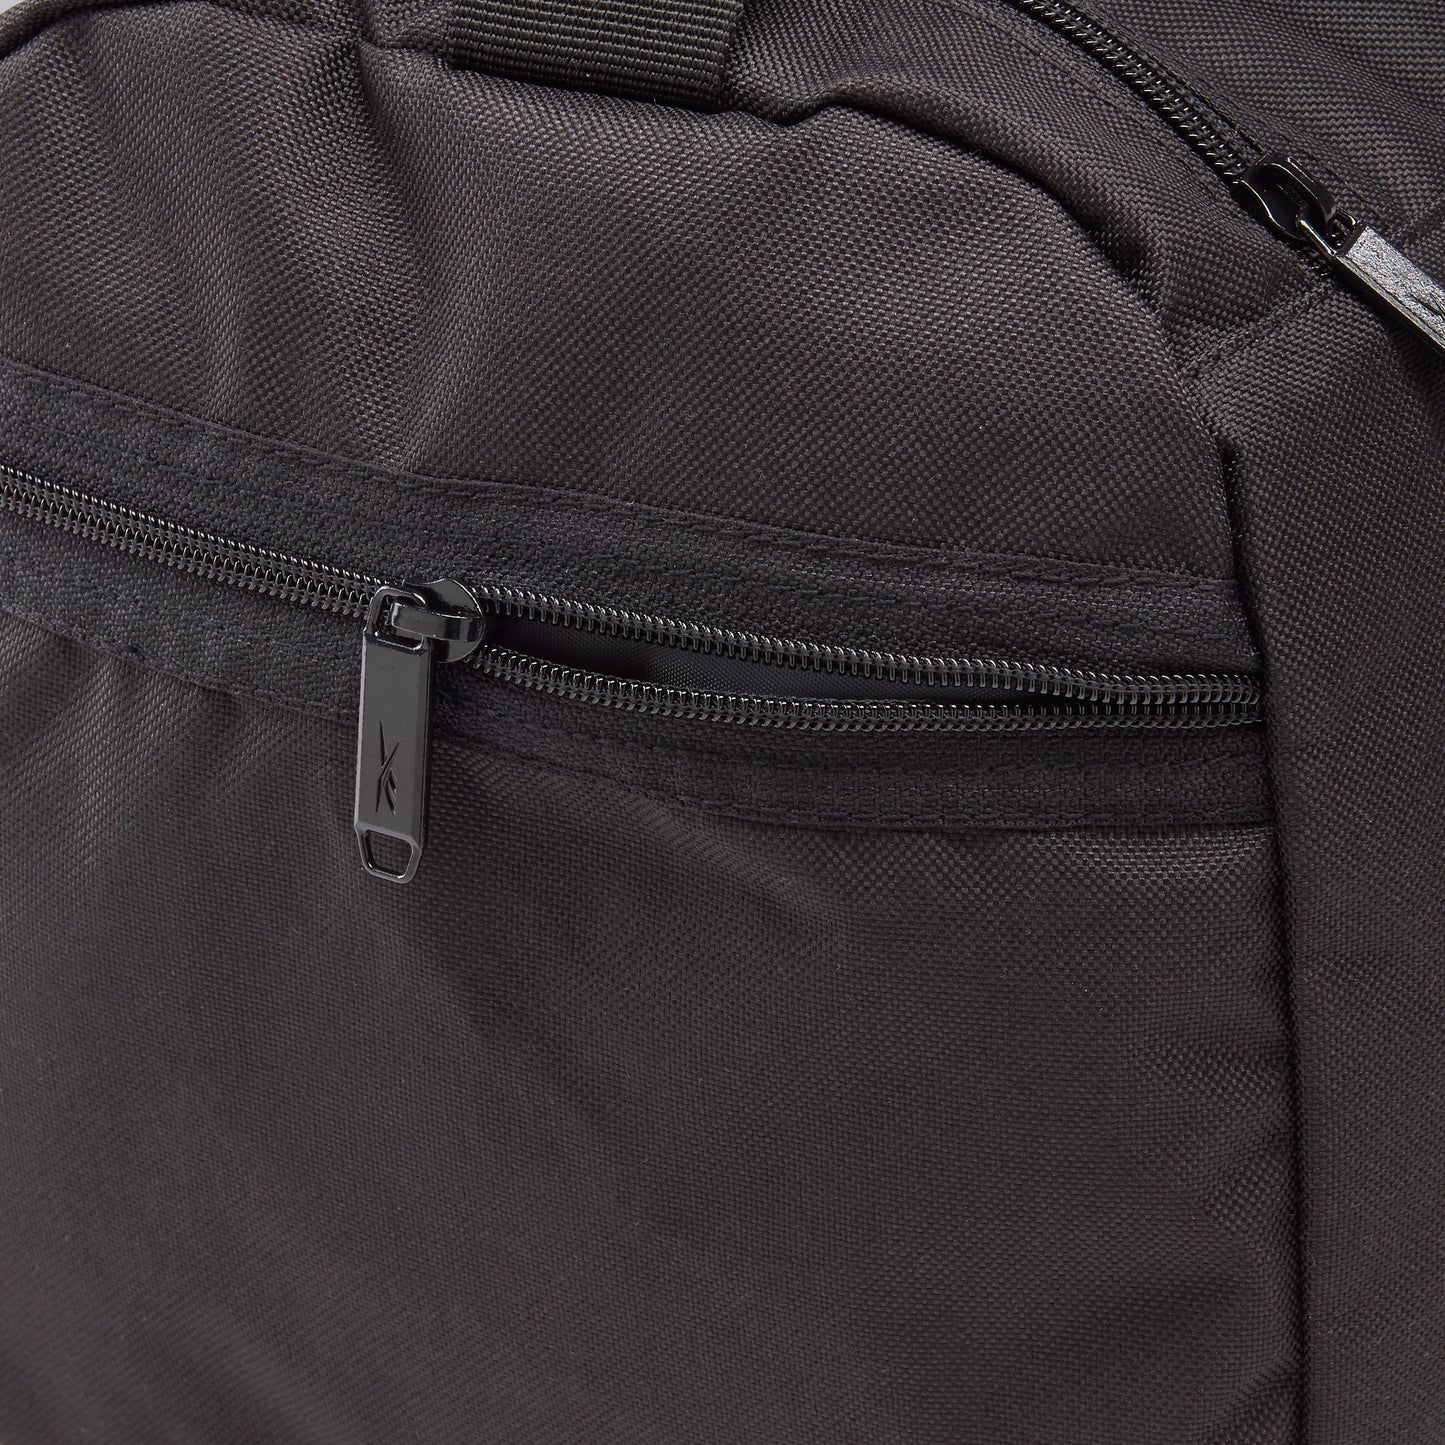 Active Core Grip Duffle Bag Small Black/White